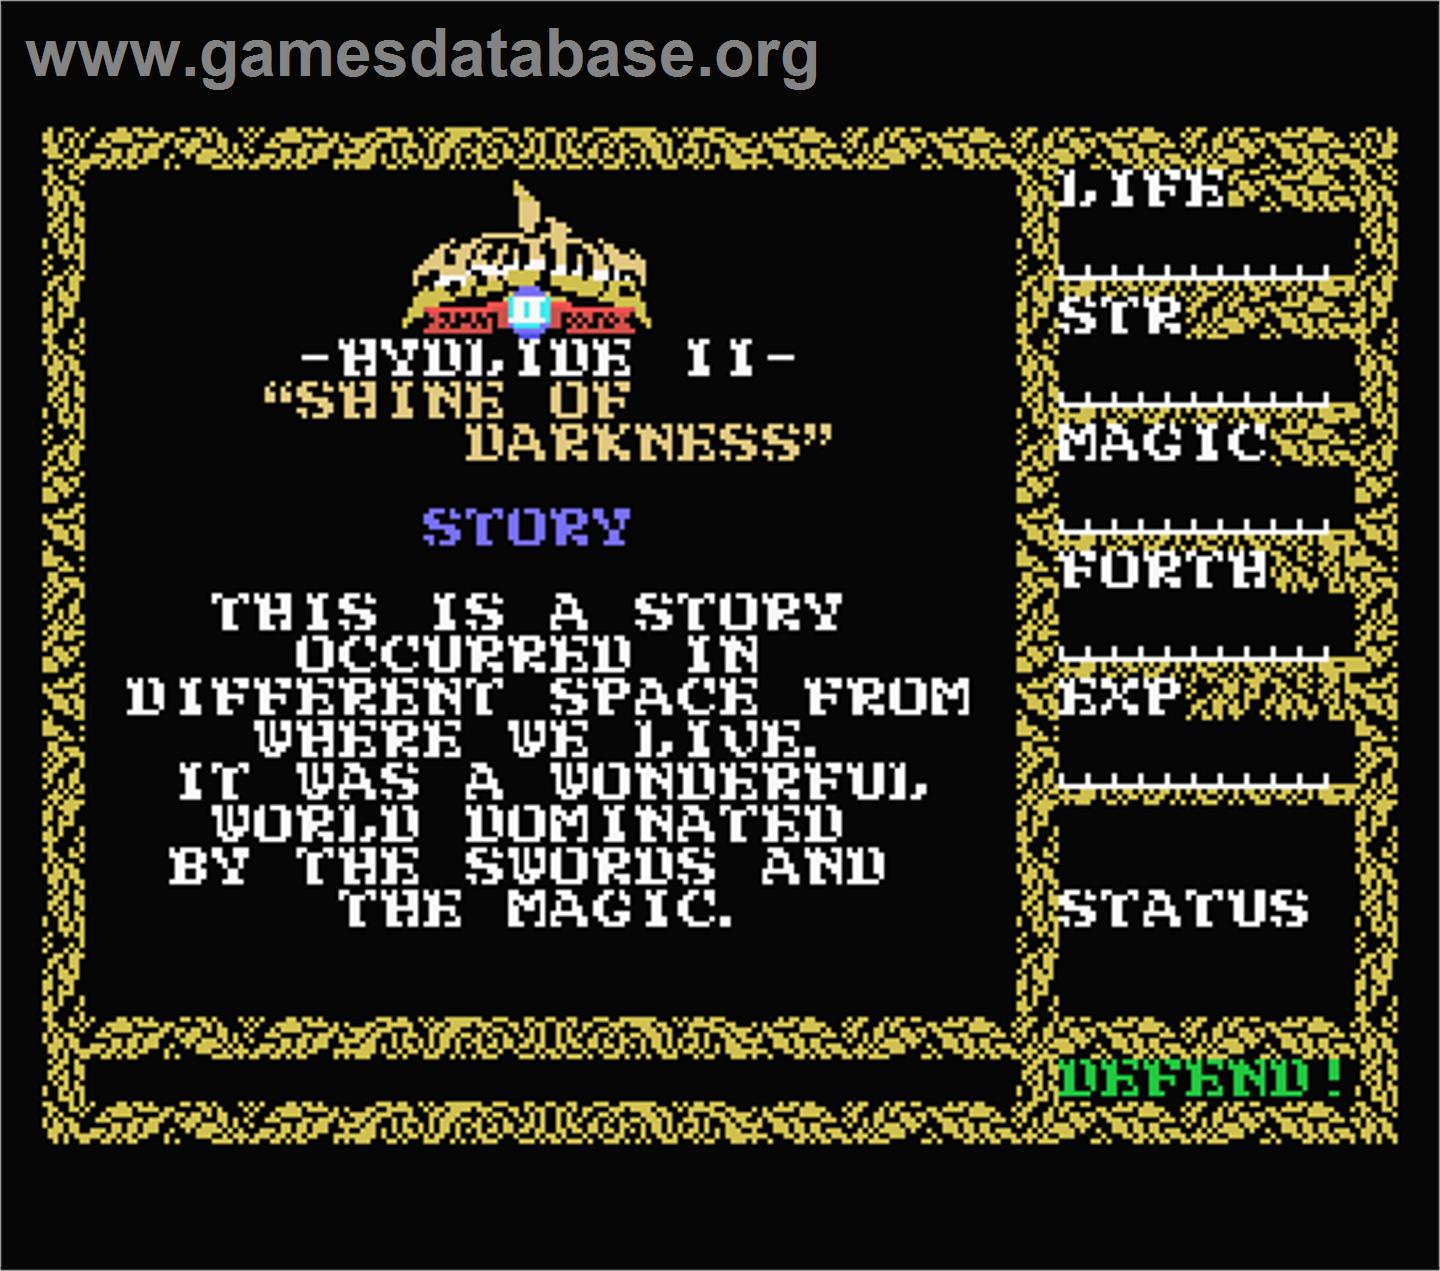 Hydlide II: Shine of Darkness - MSX - Artwork - Title Screen